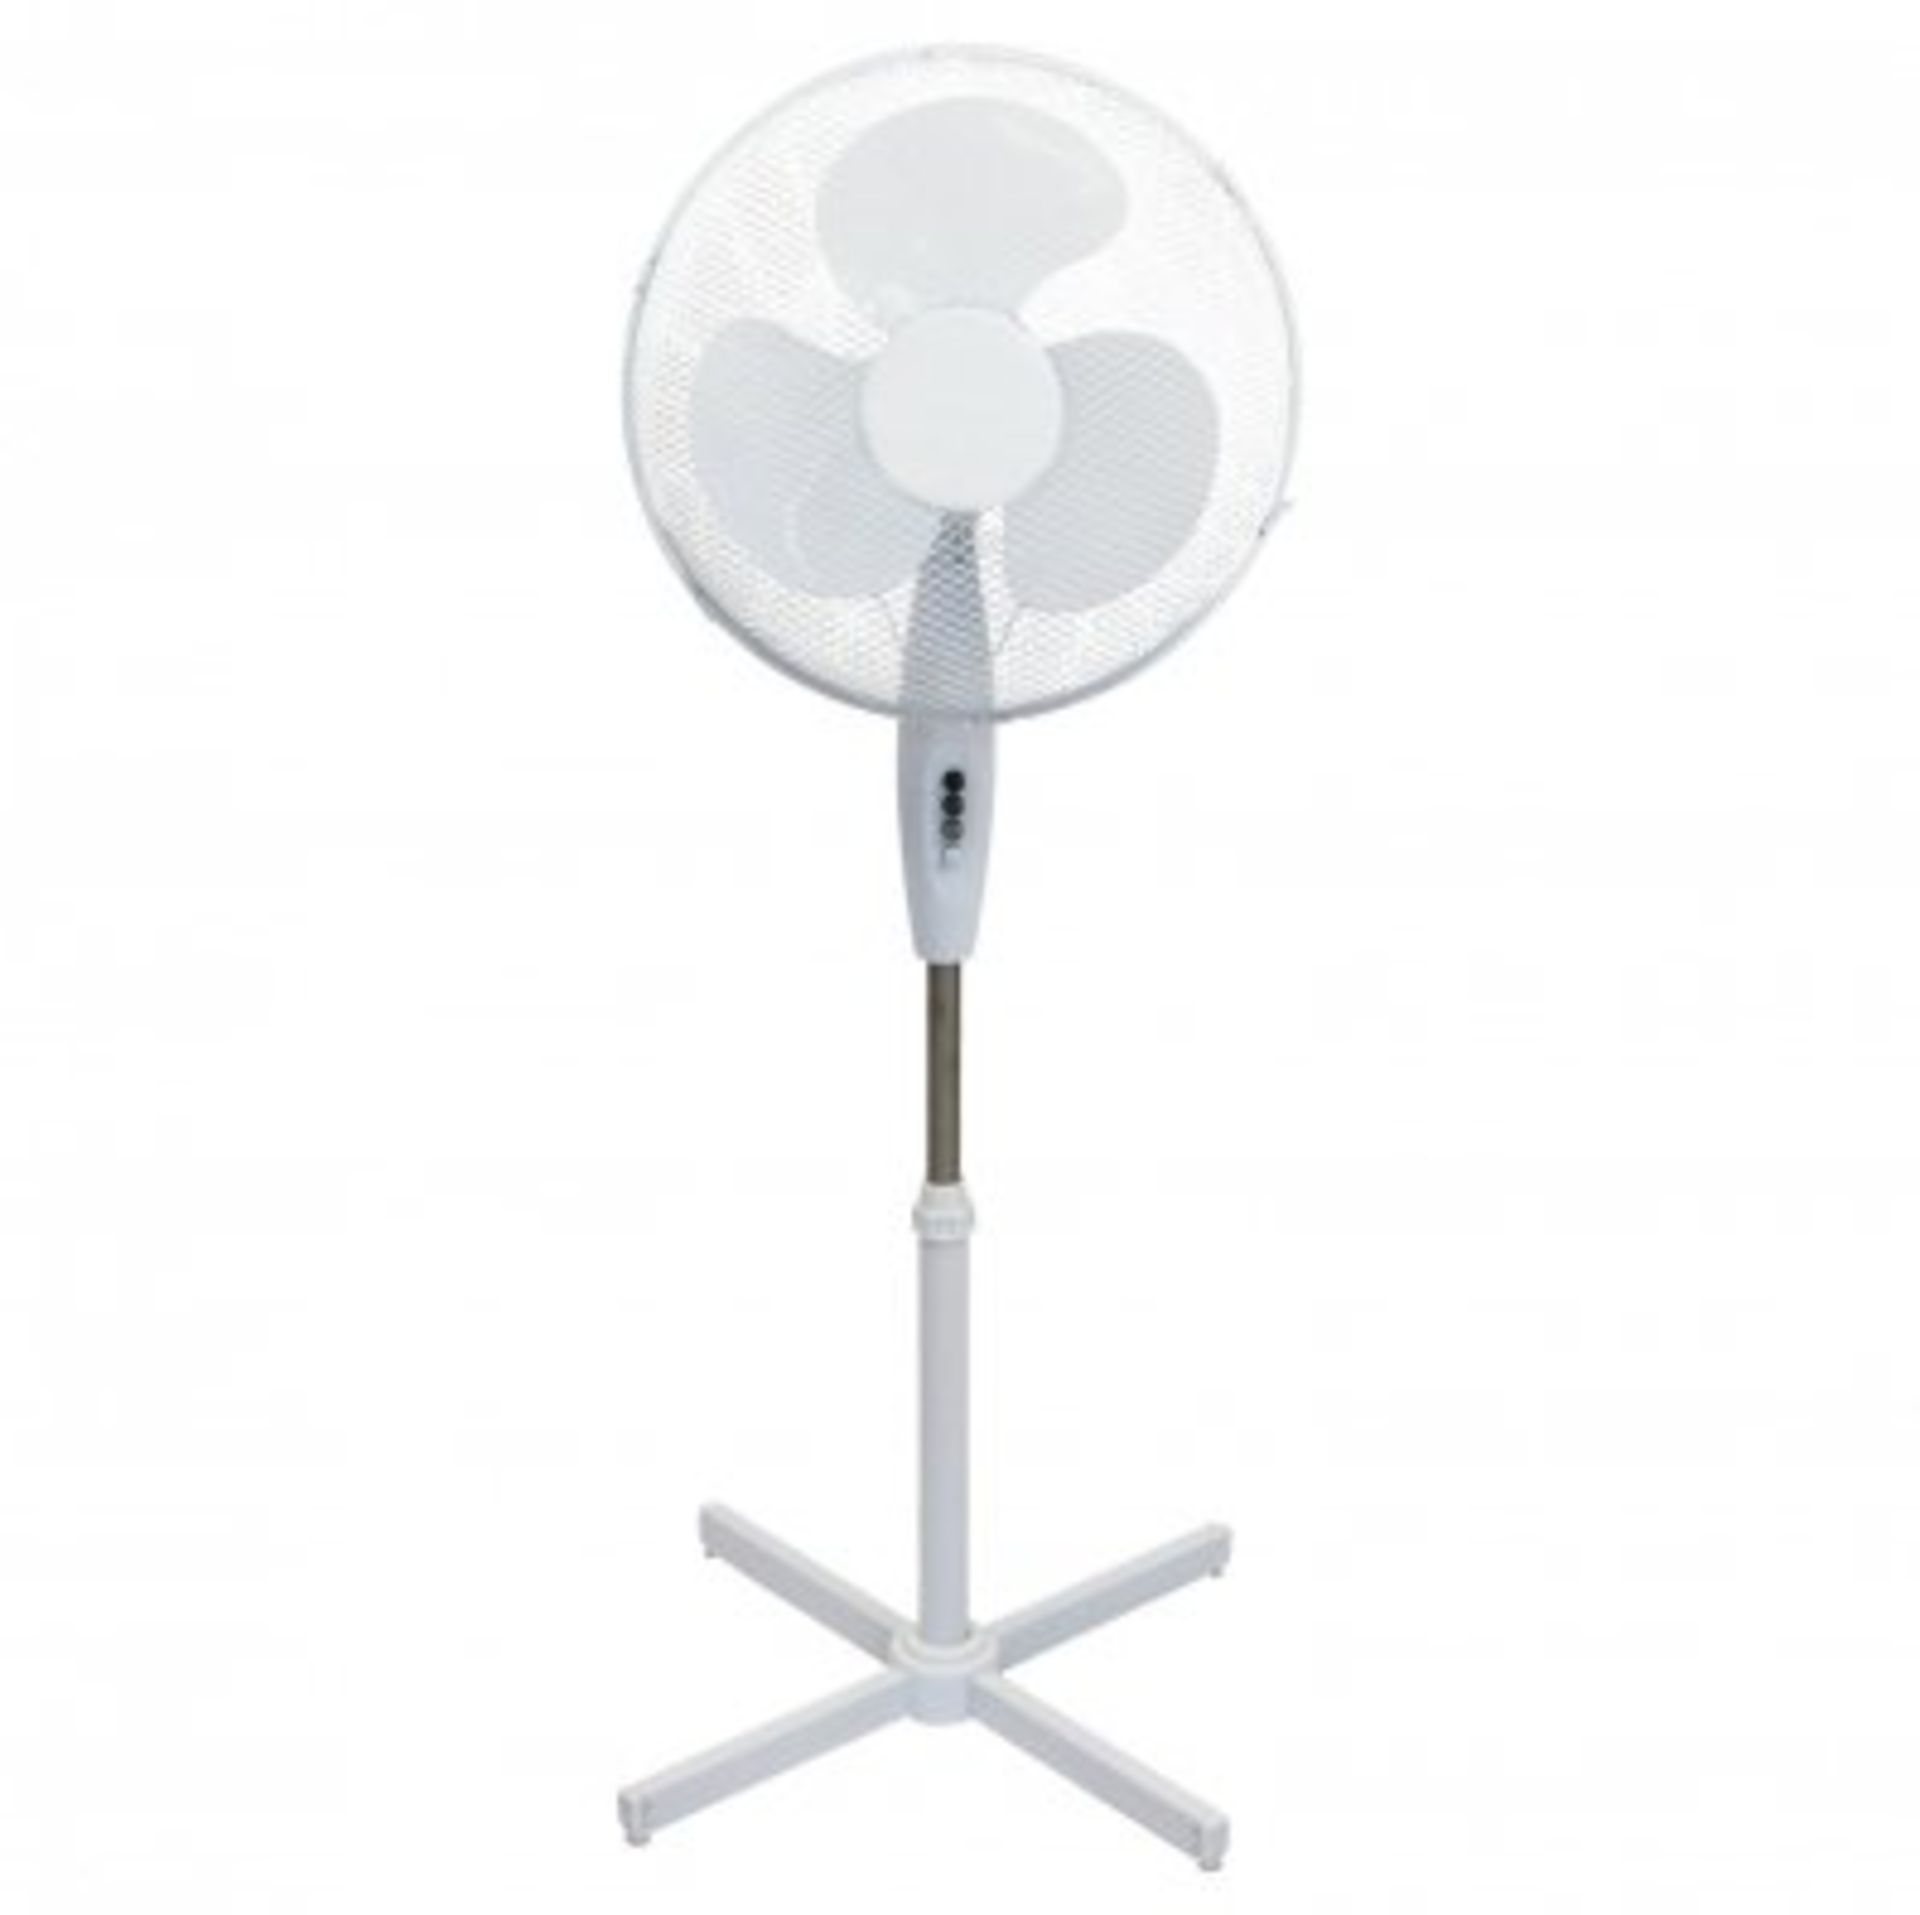 (RU2) 16" Oscillating Pedestal Electric Fan The fan head oscillates and tilts which mea...